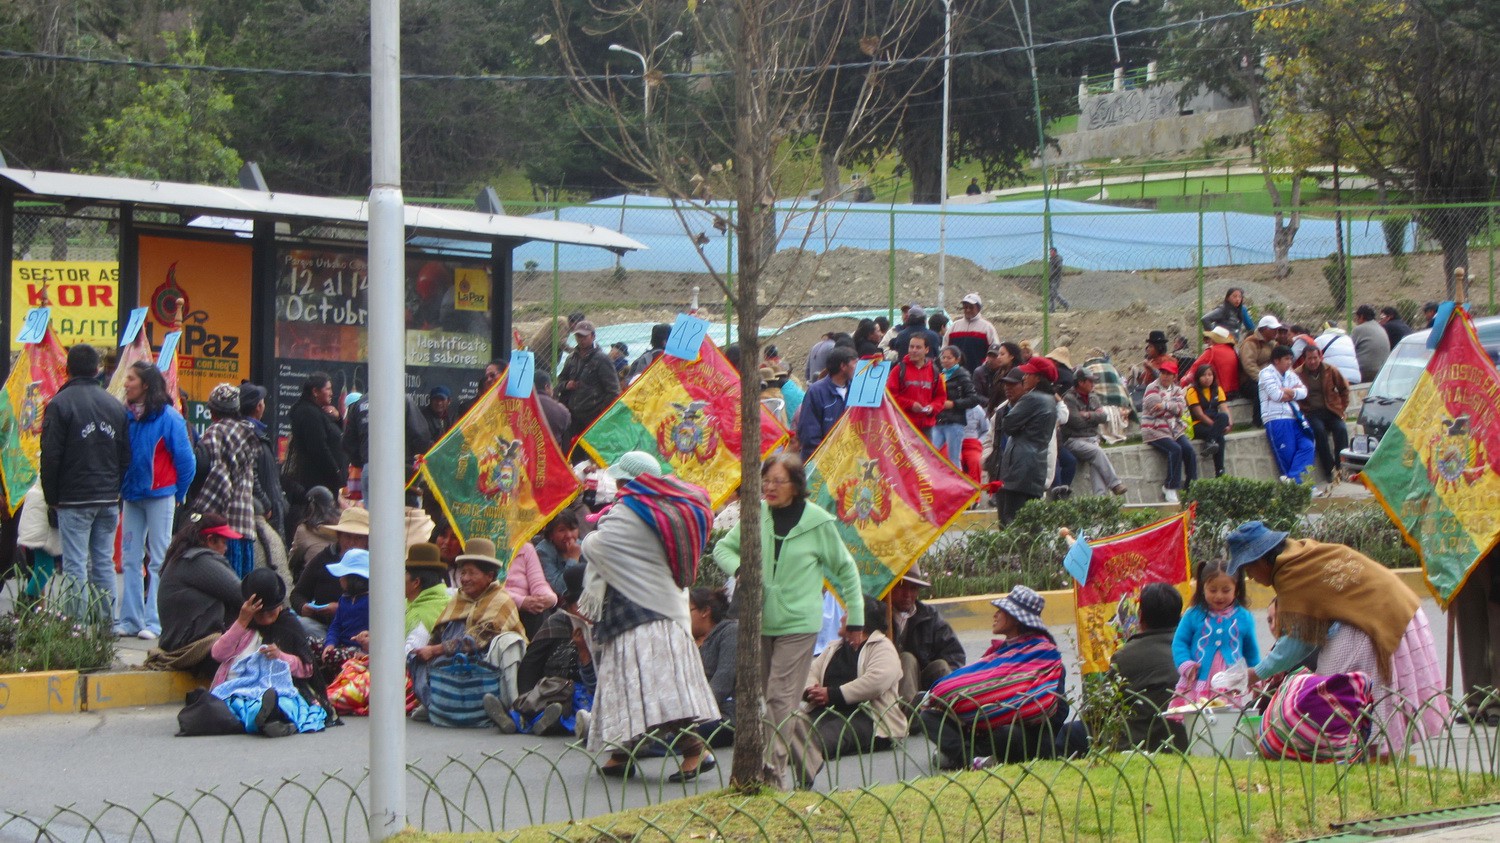 Demo in La Paz